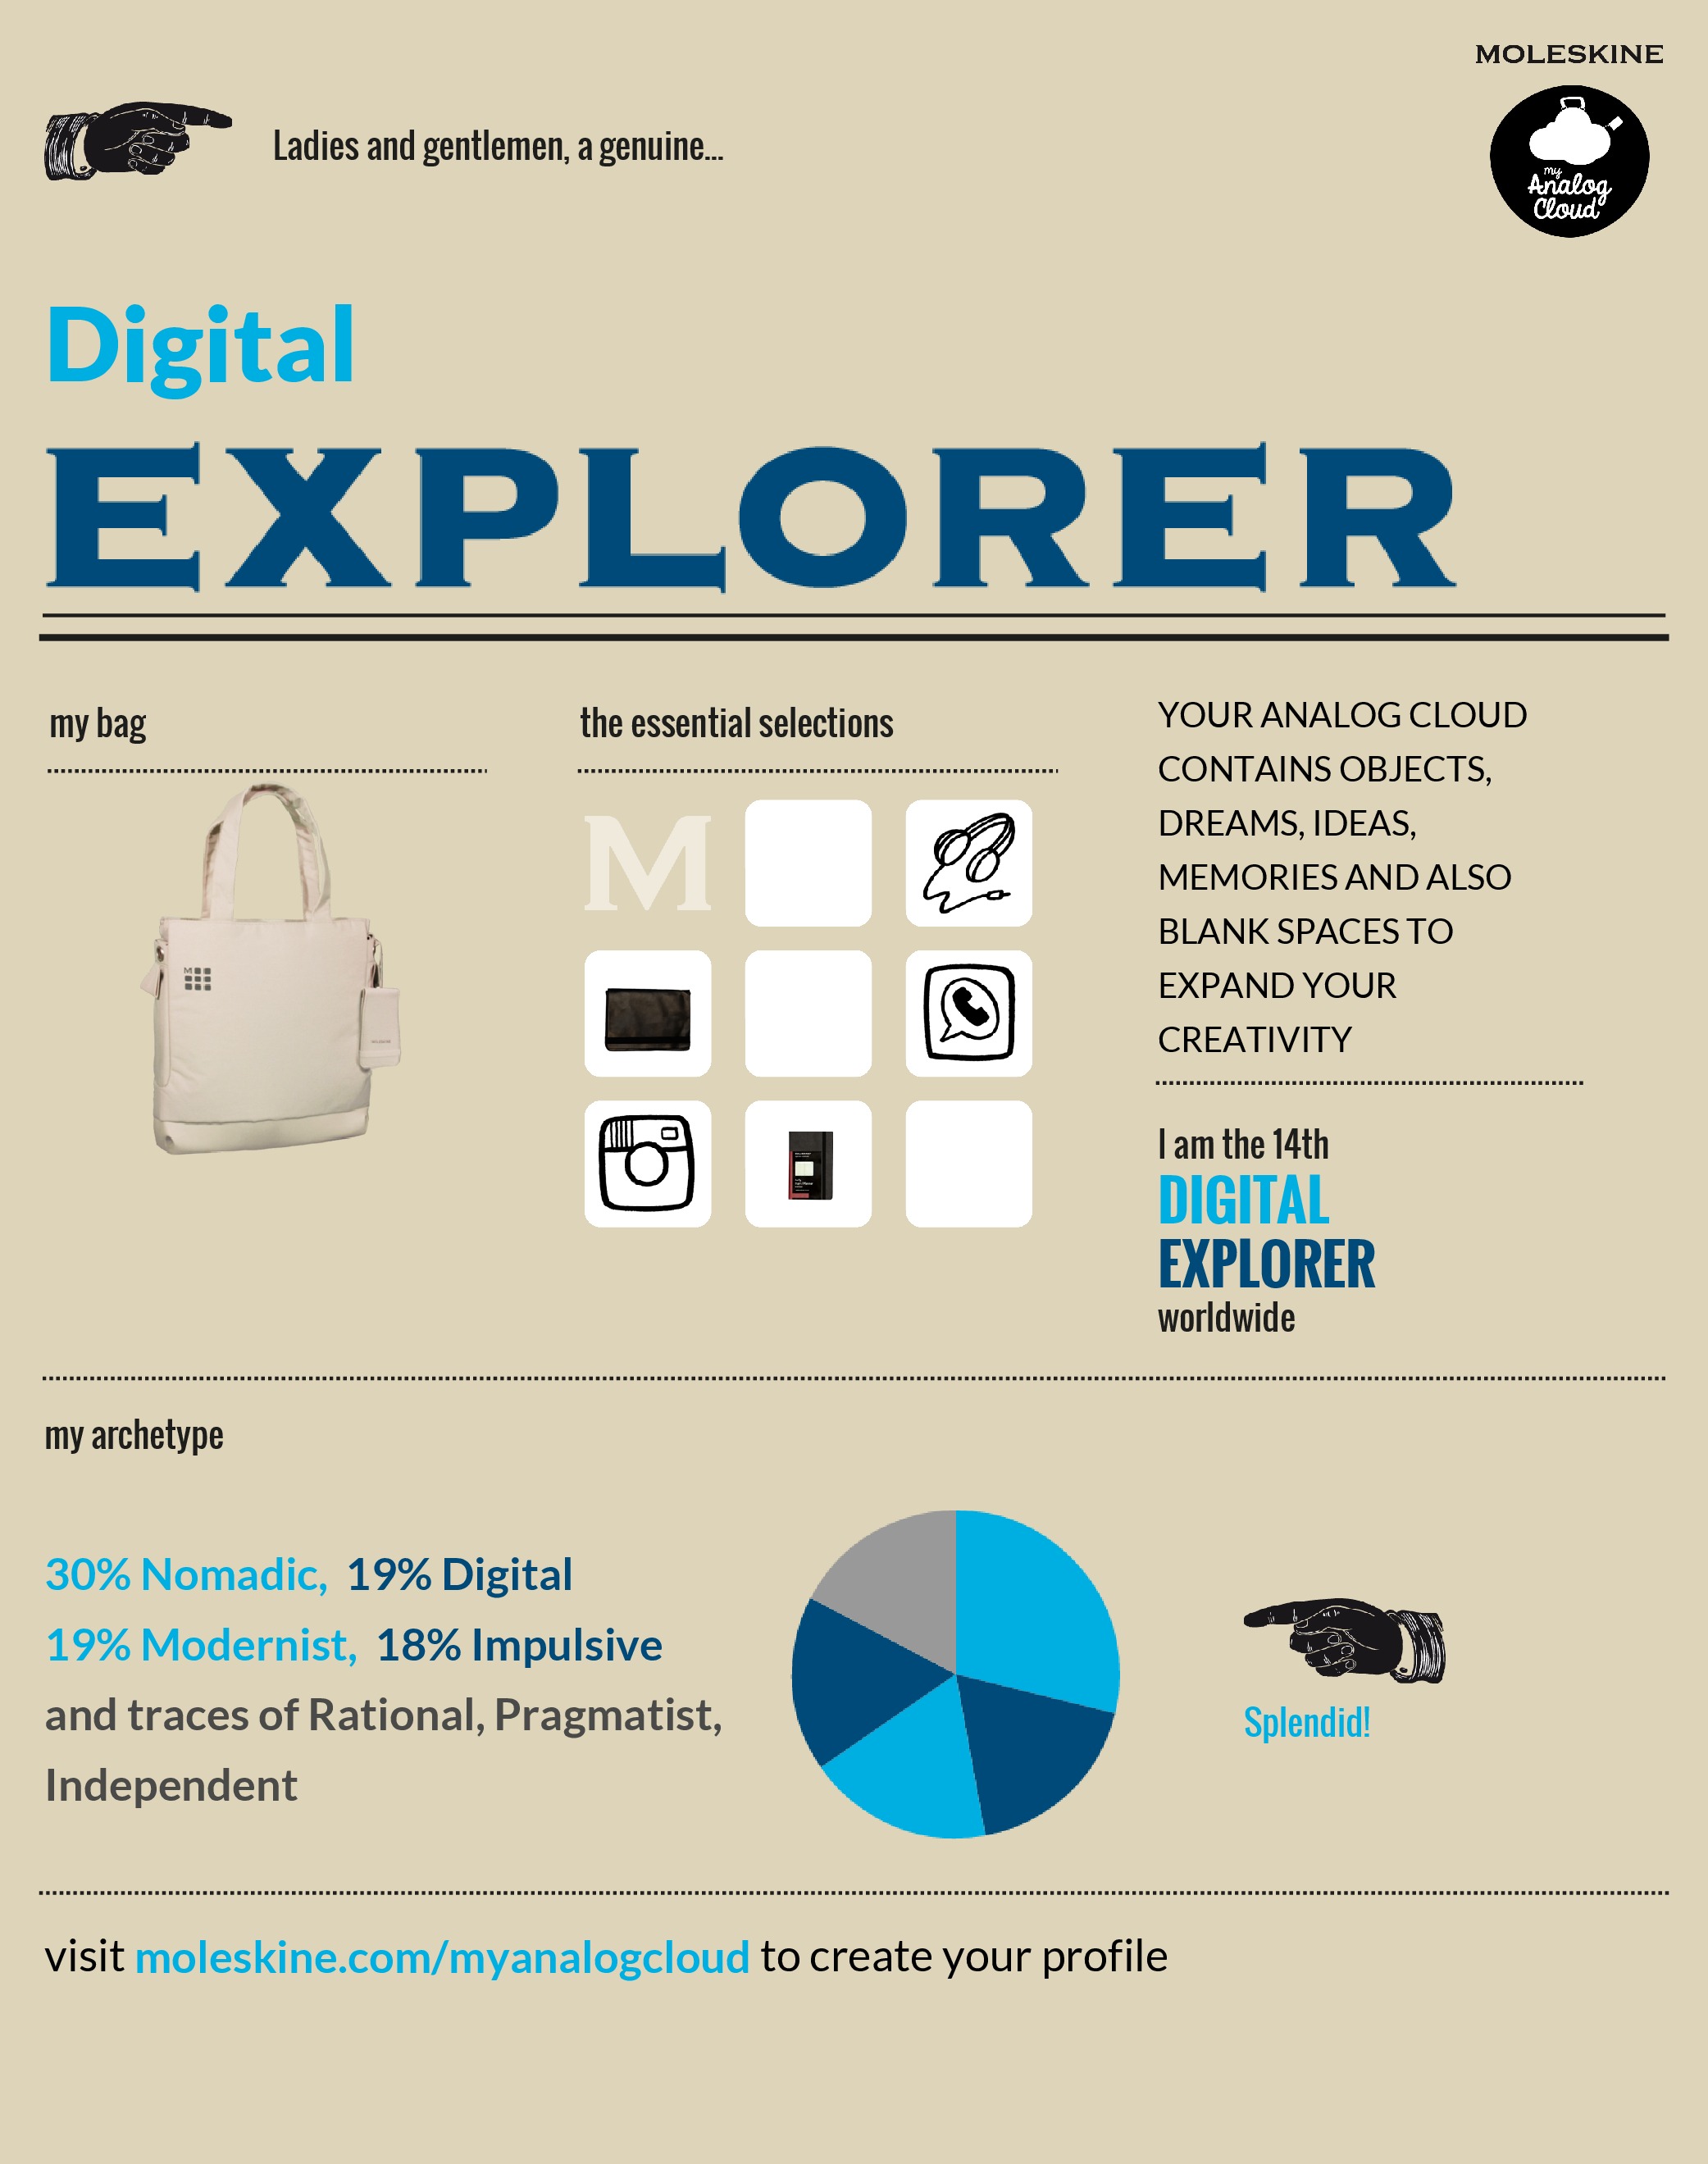 A Genuine Digital Explorer! ooooyeaahh!